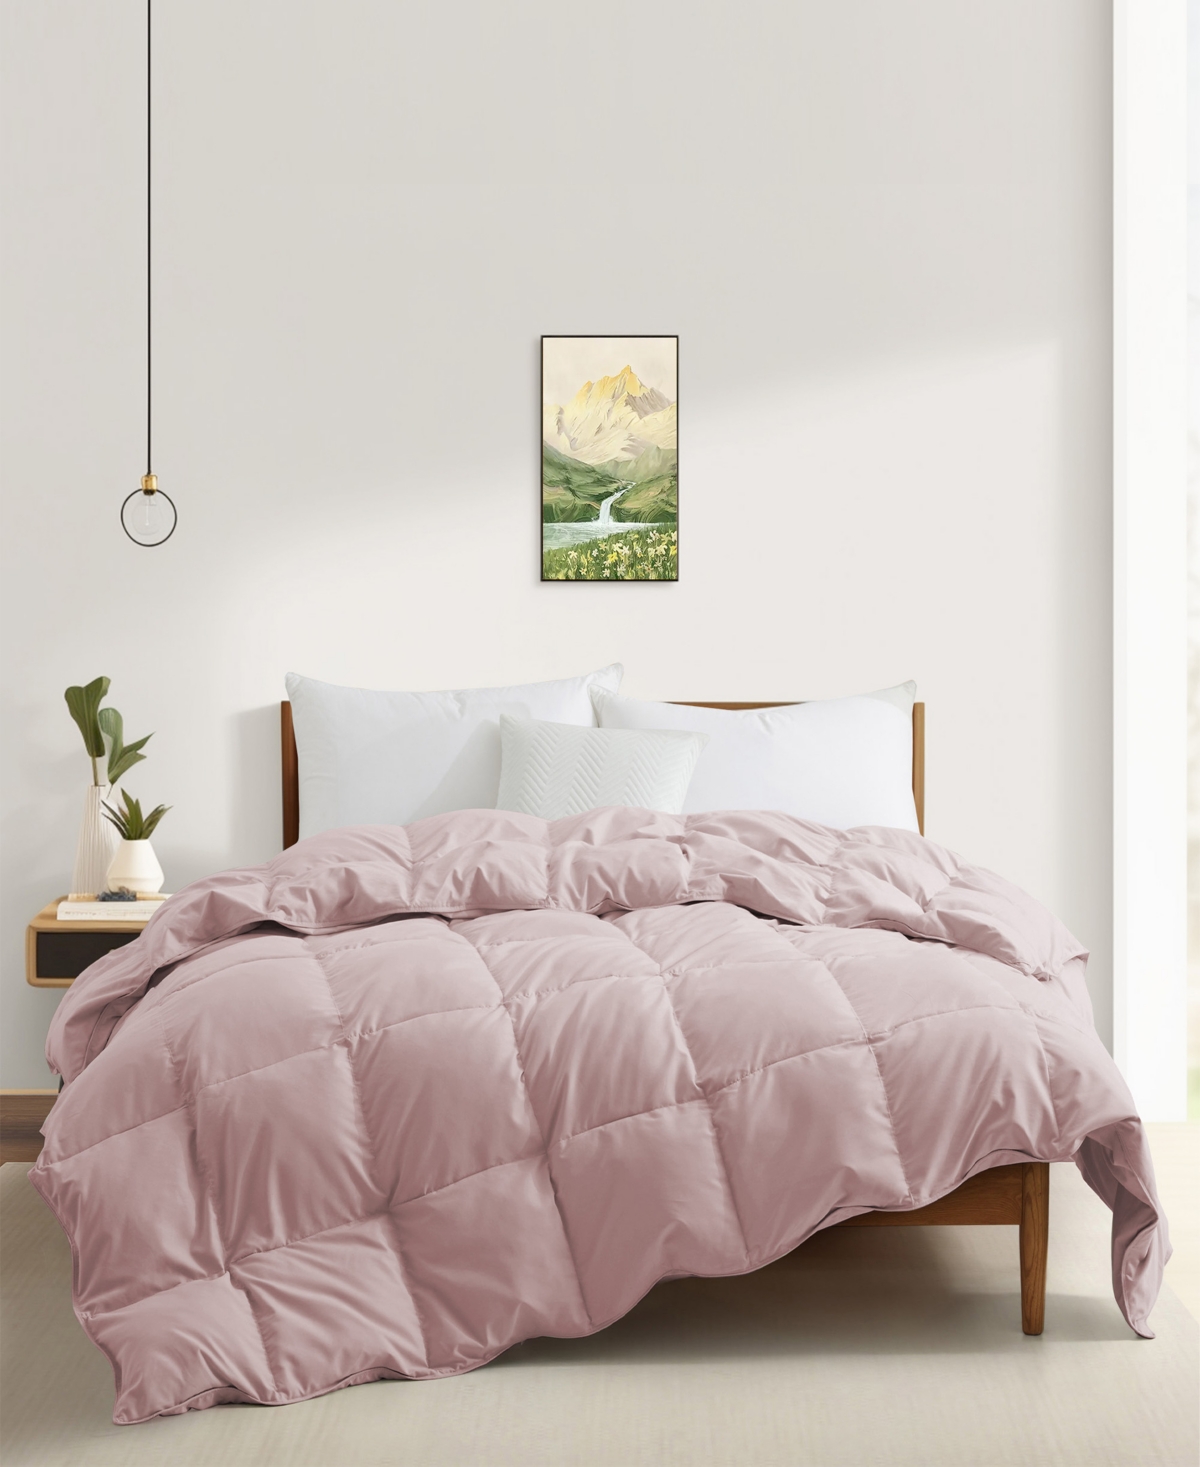 Unikome Lightweight White Goose Down Feather Fiber Comforter, King In Pink